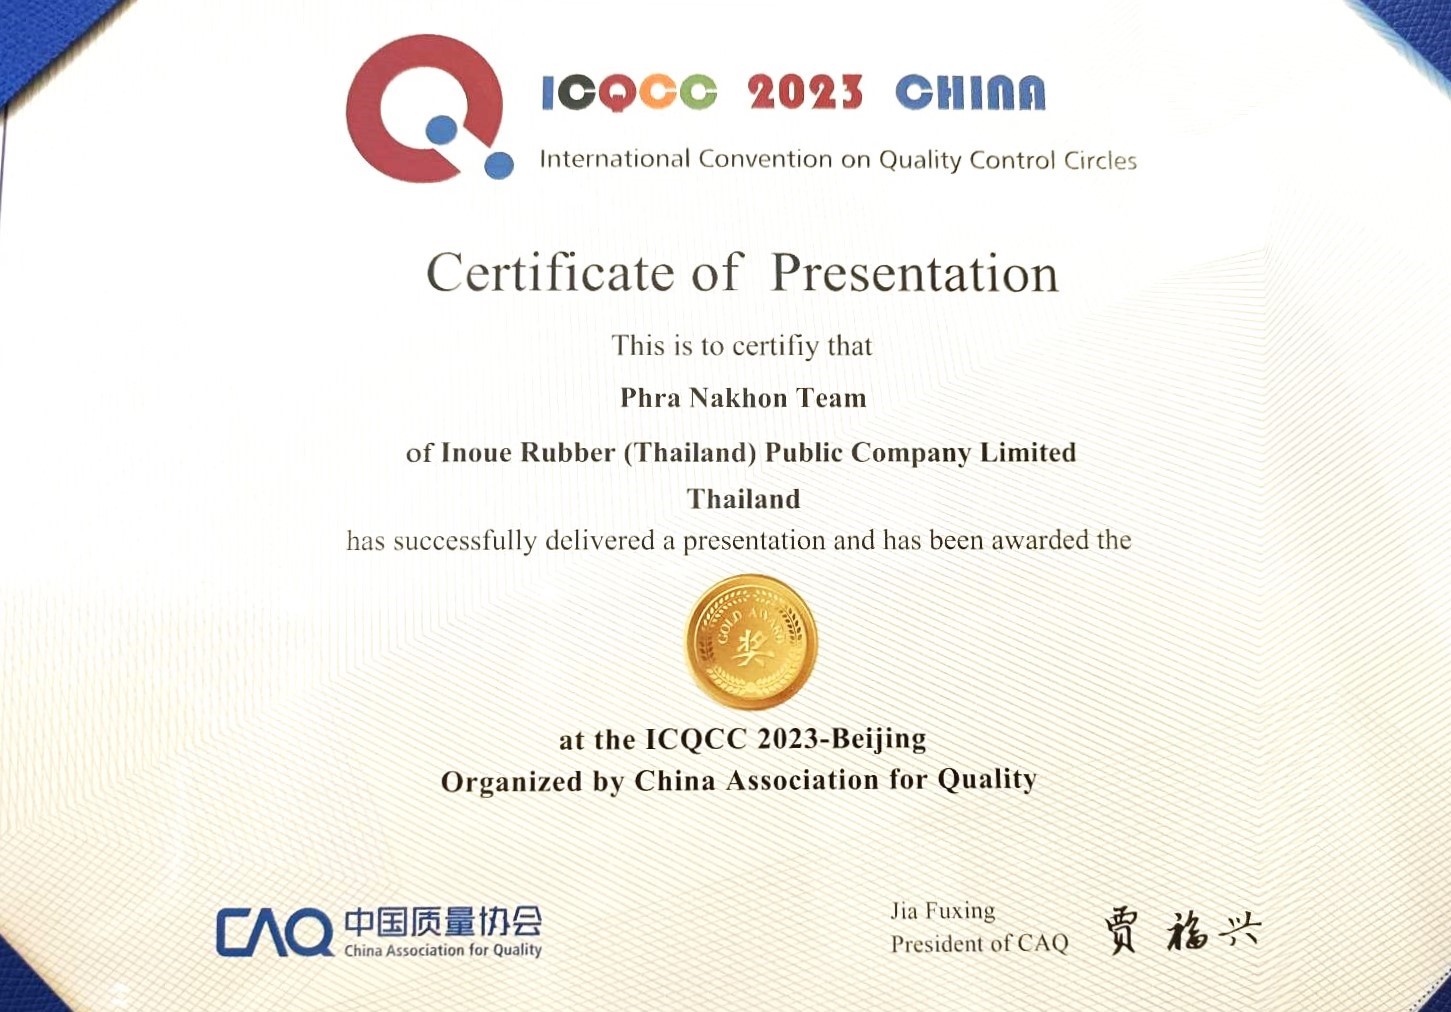 IRC ได้รับ “รางวัลระดับเหรียญทอง” จากการนำเสนอผลงาน QCC ในงาน International Convention on Quality Control Circles (ICQCC) ครั้งที่ 48 ที่กรุงปักกิ่ง ประเทศจีน